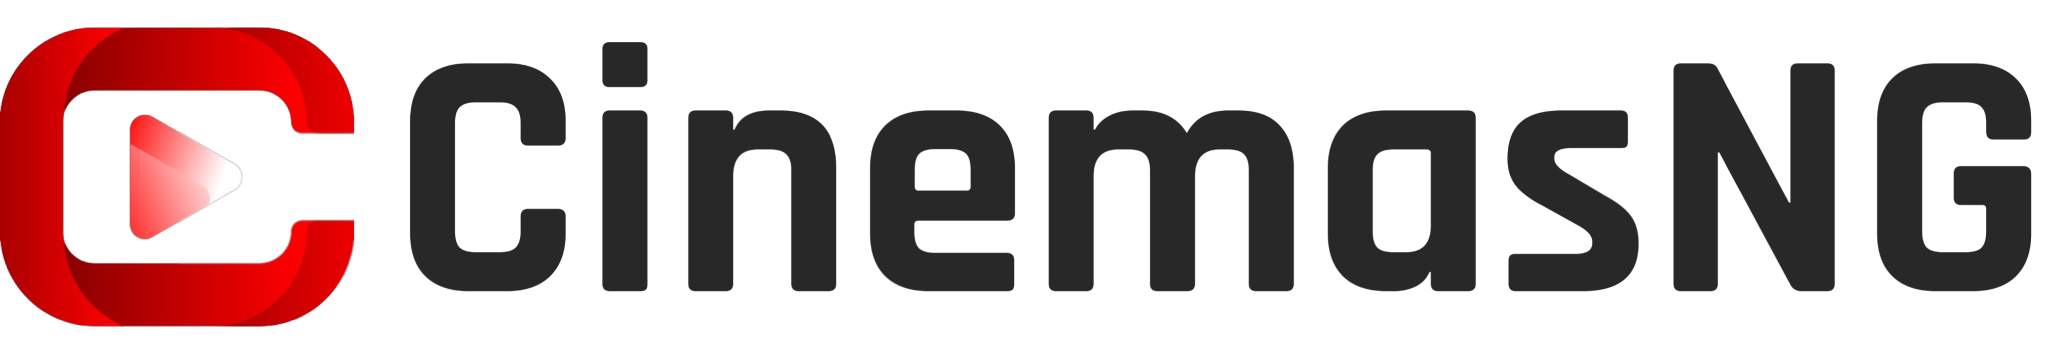 CinemasNG Logo